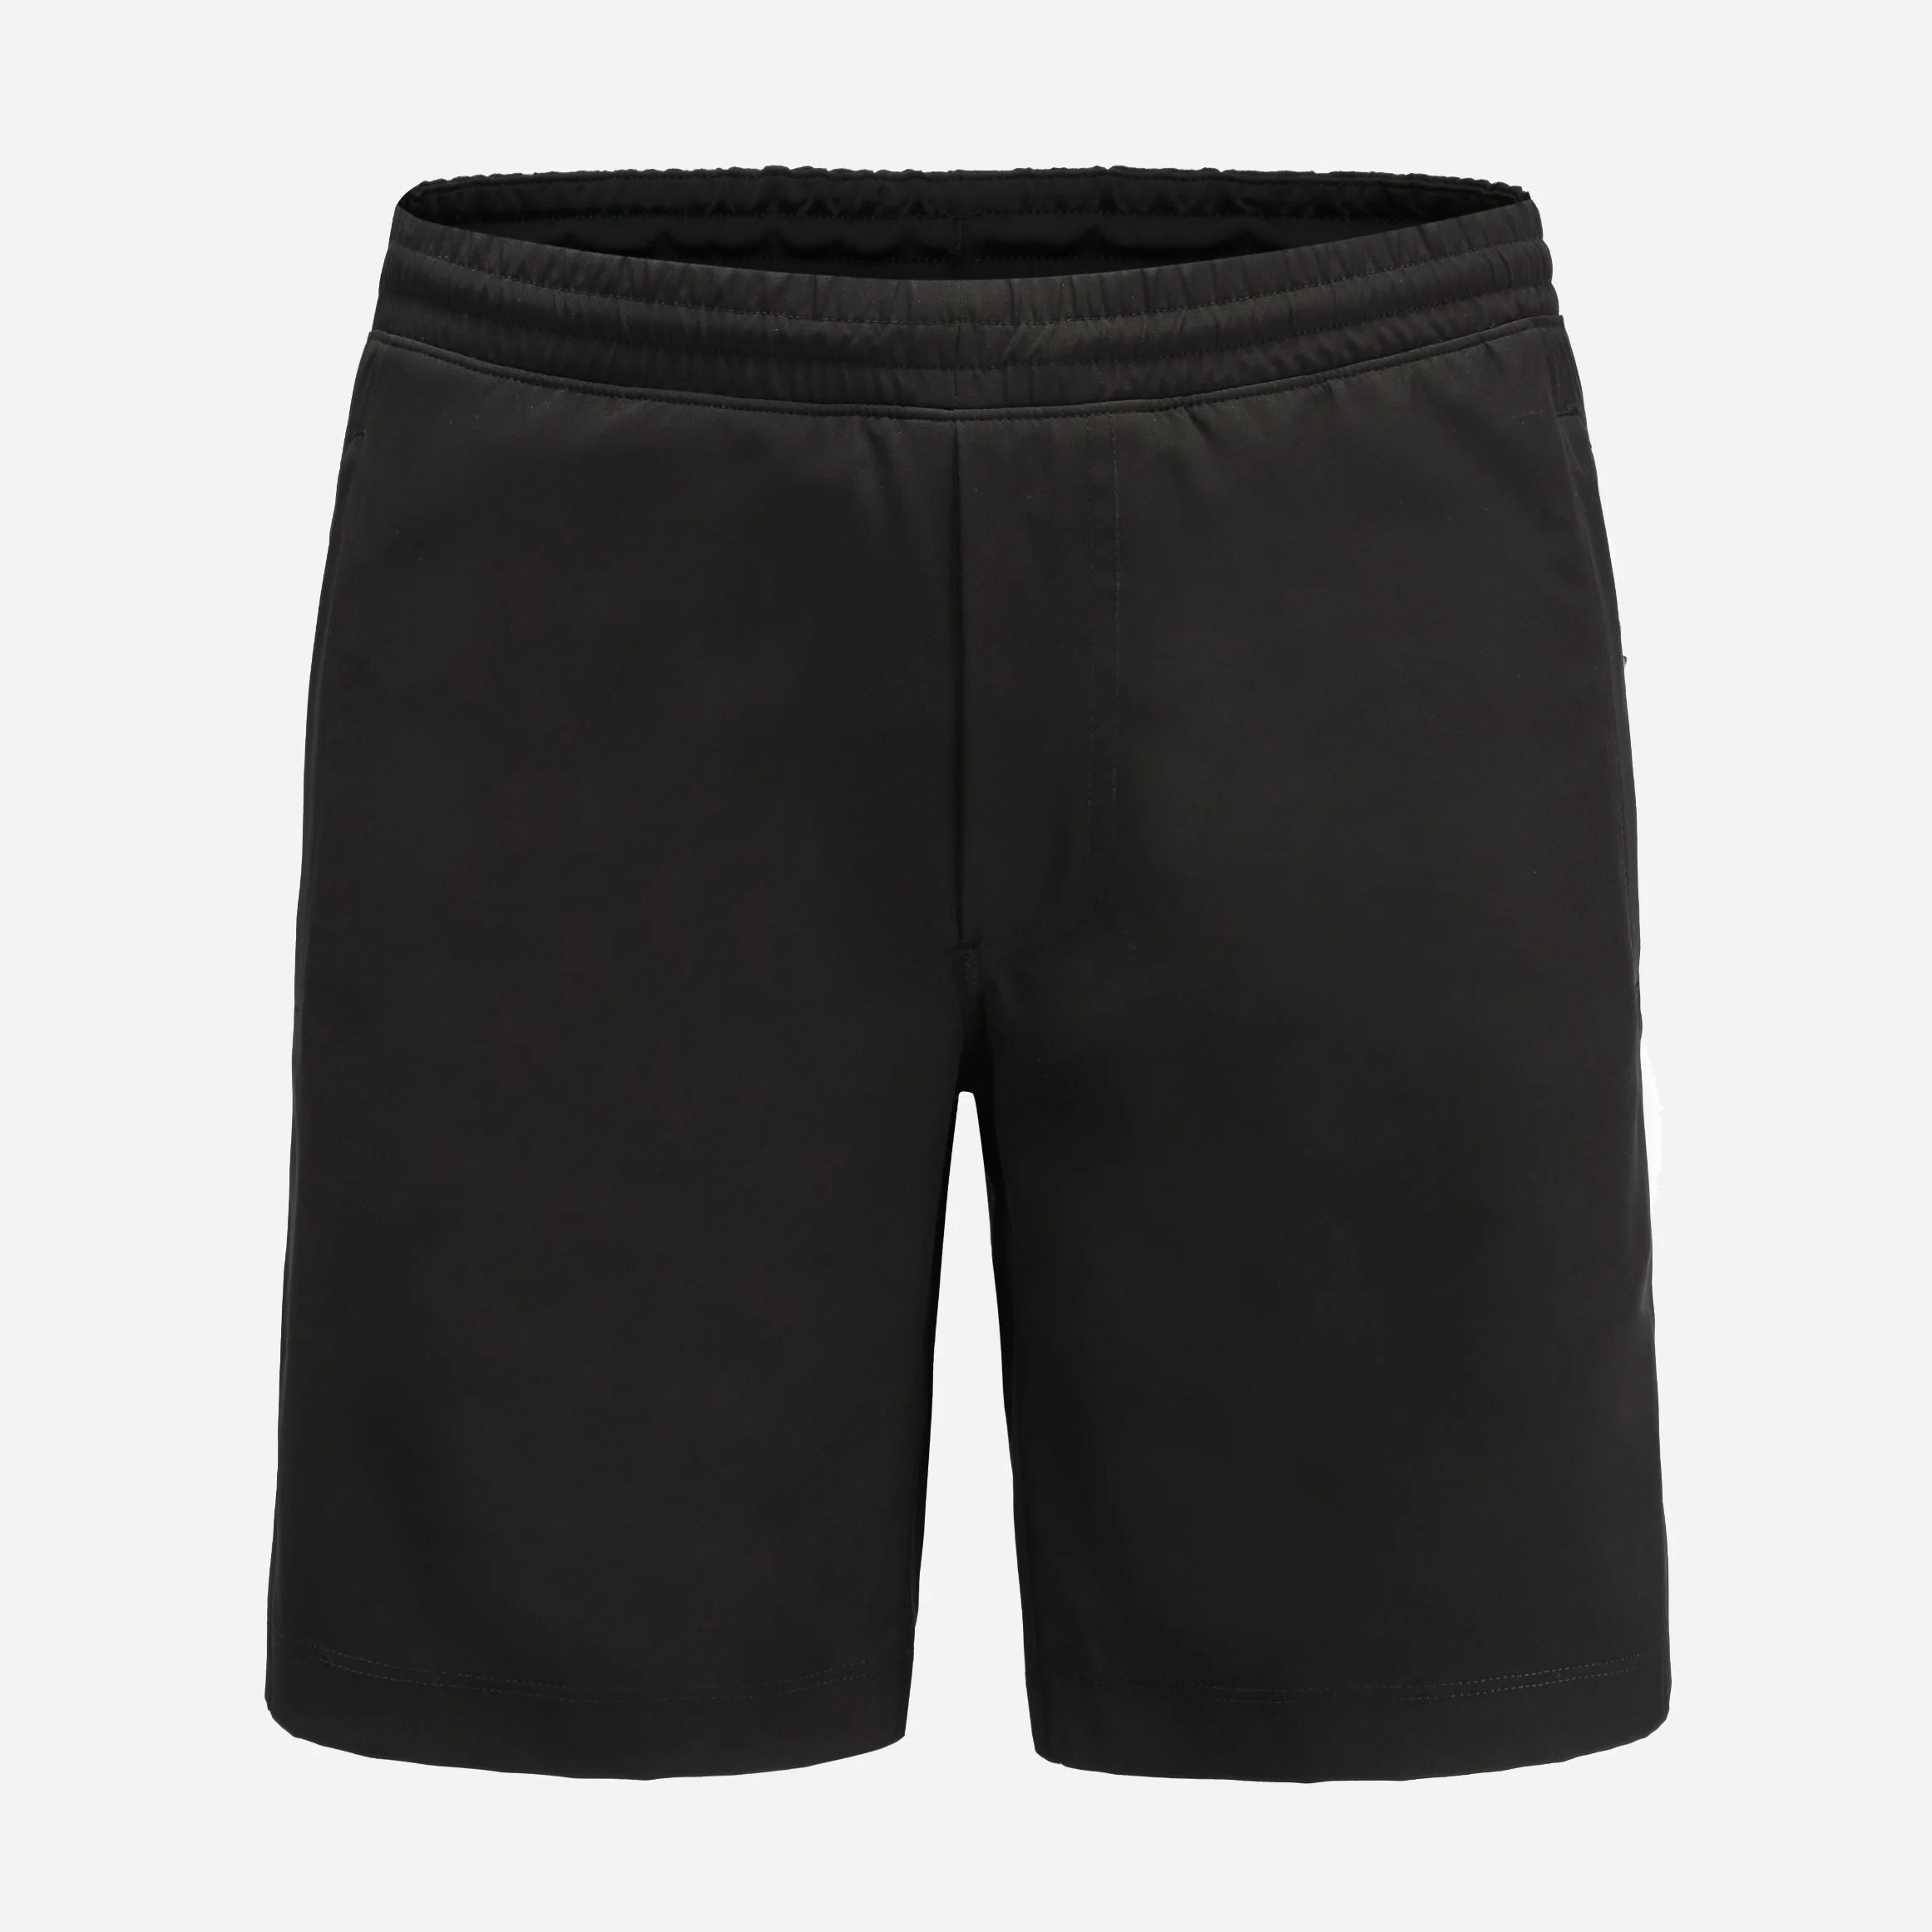 Men's Pull on Shorts Full Elastic Waist Beach Shorts